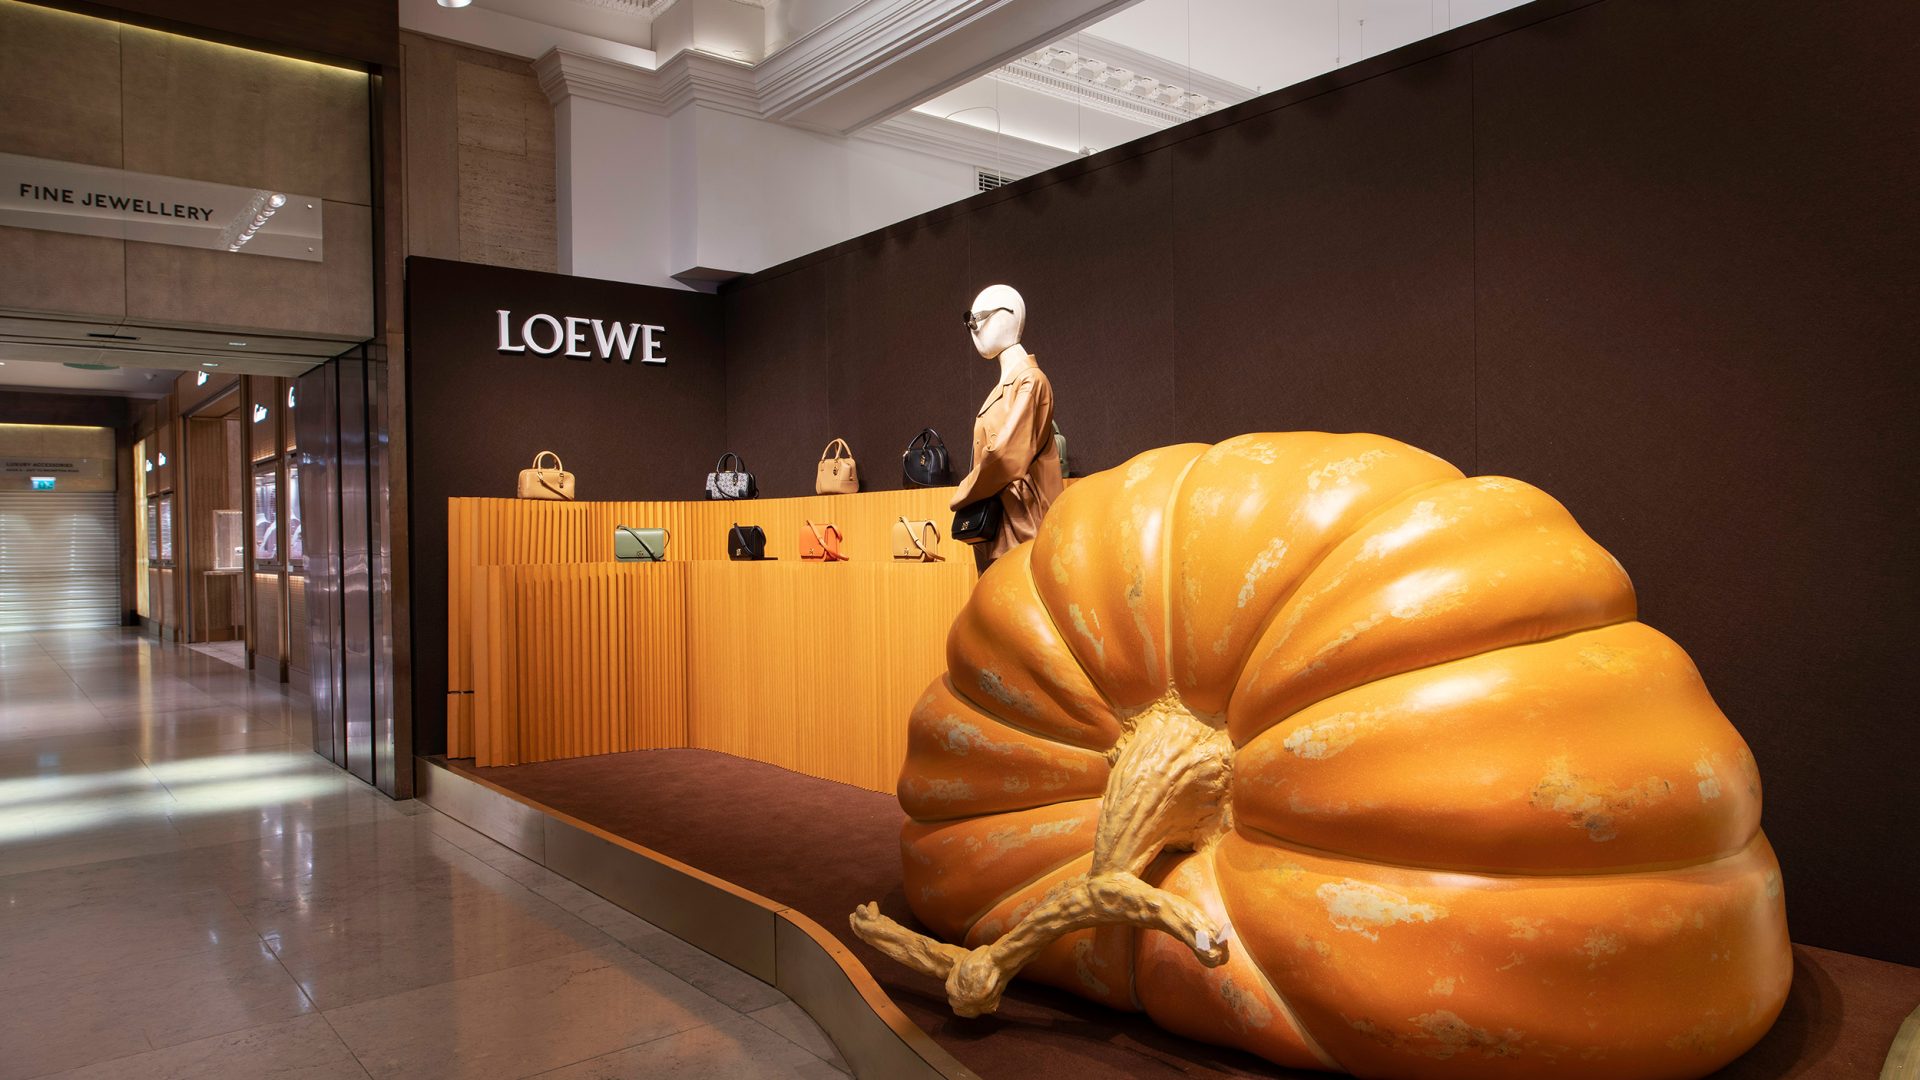 Loewe Harrods Exhibition retail design_Pardgroup